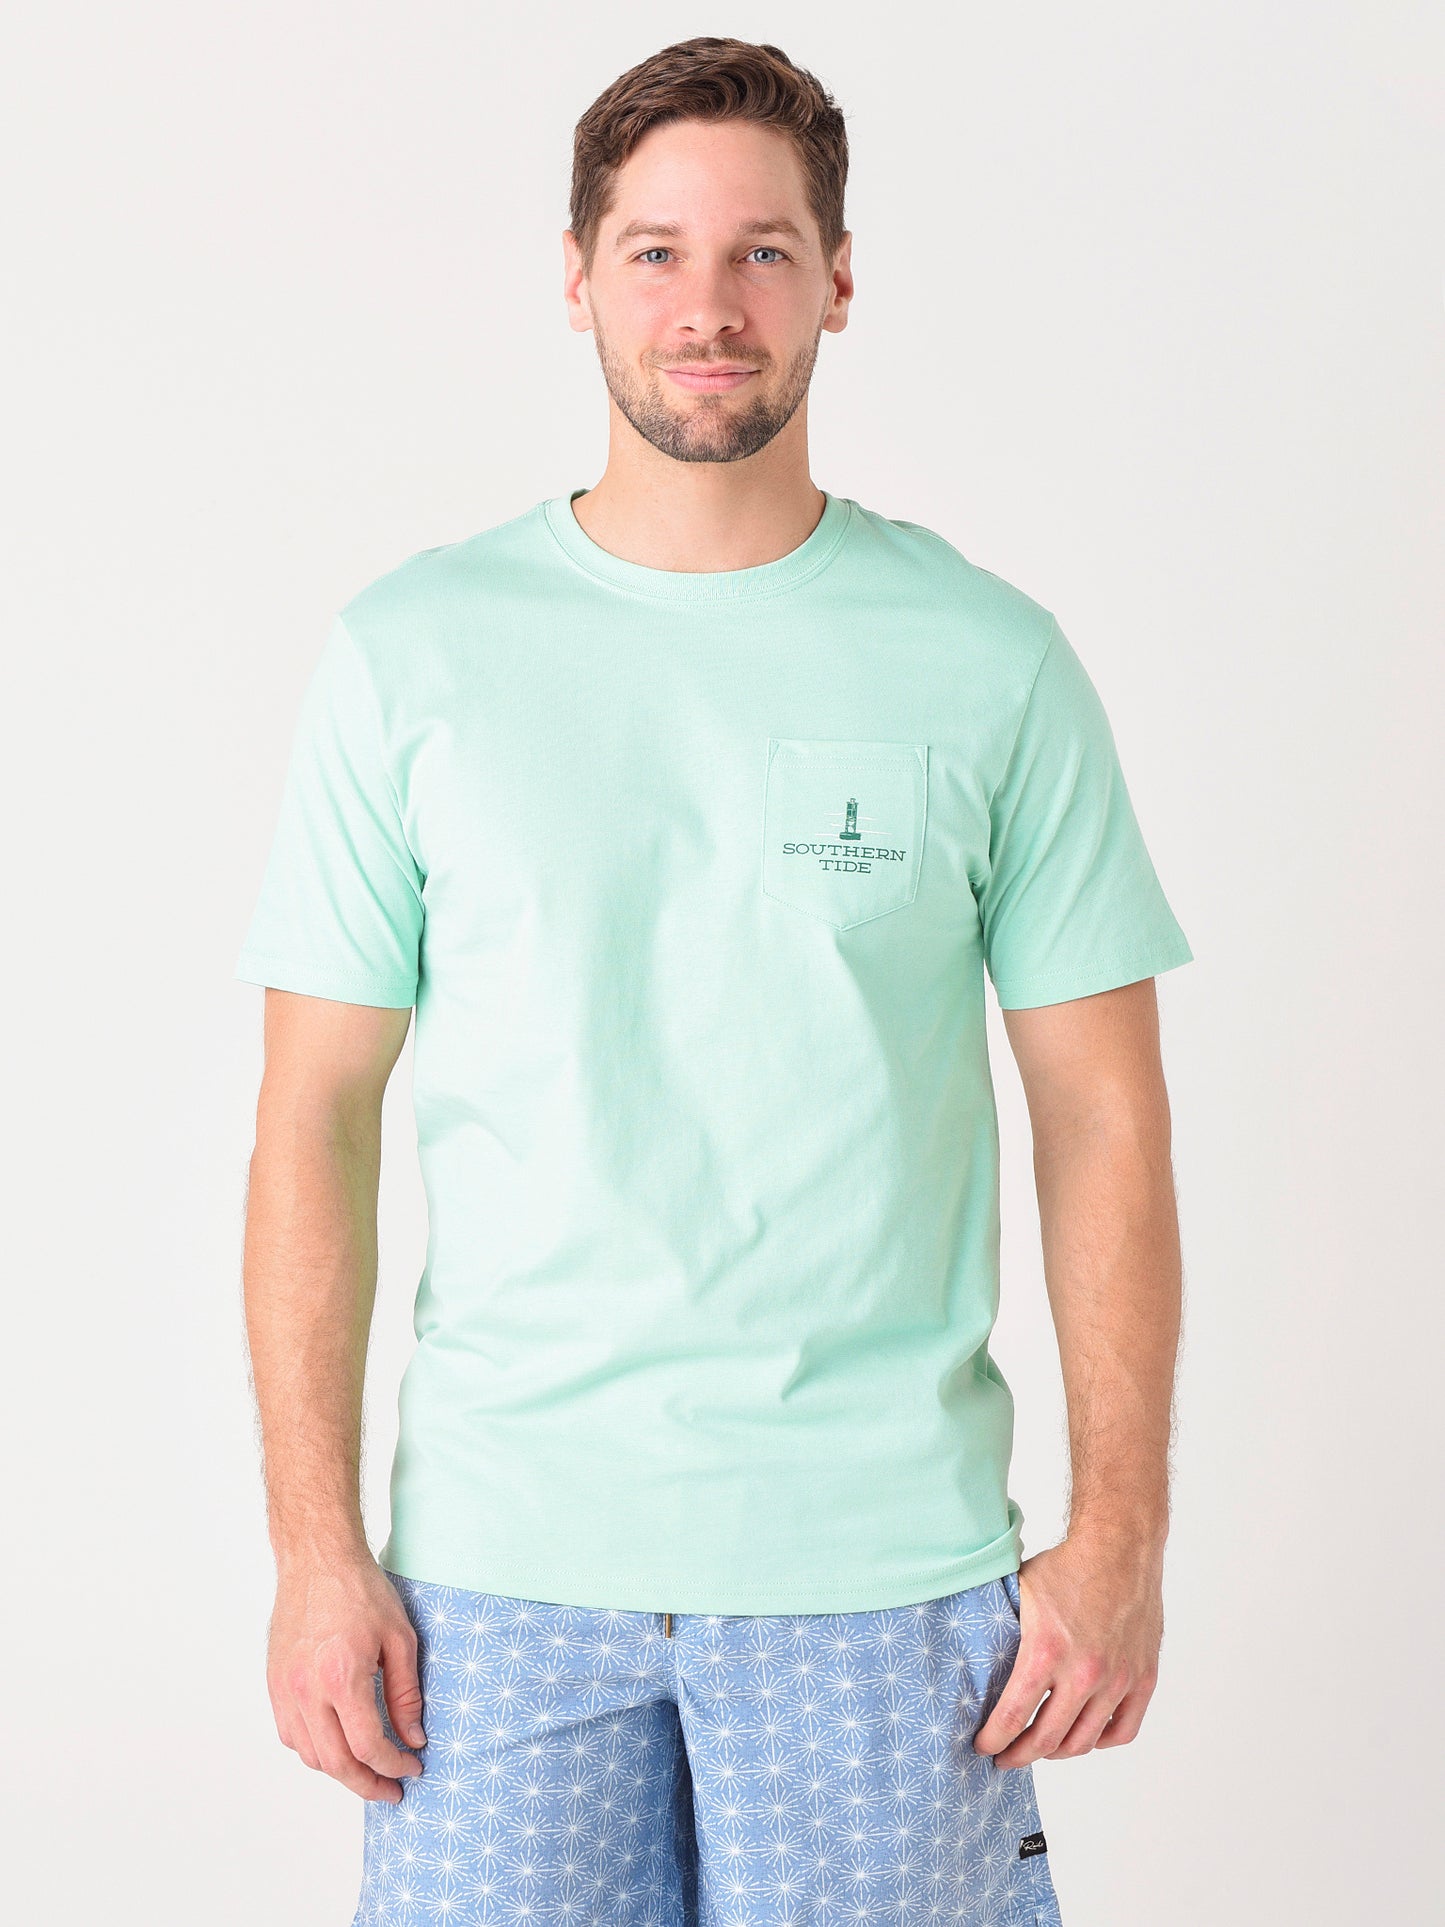 Southern Tide Men's Green Going Gone Triptyc T-Shirt